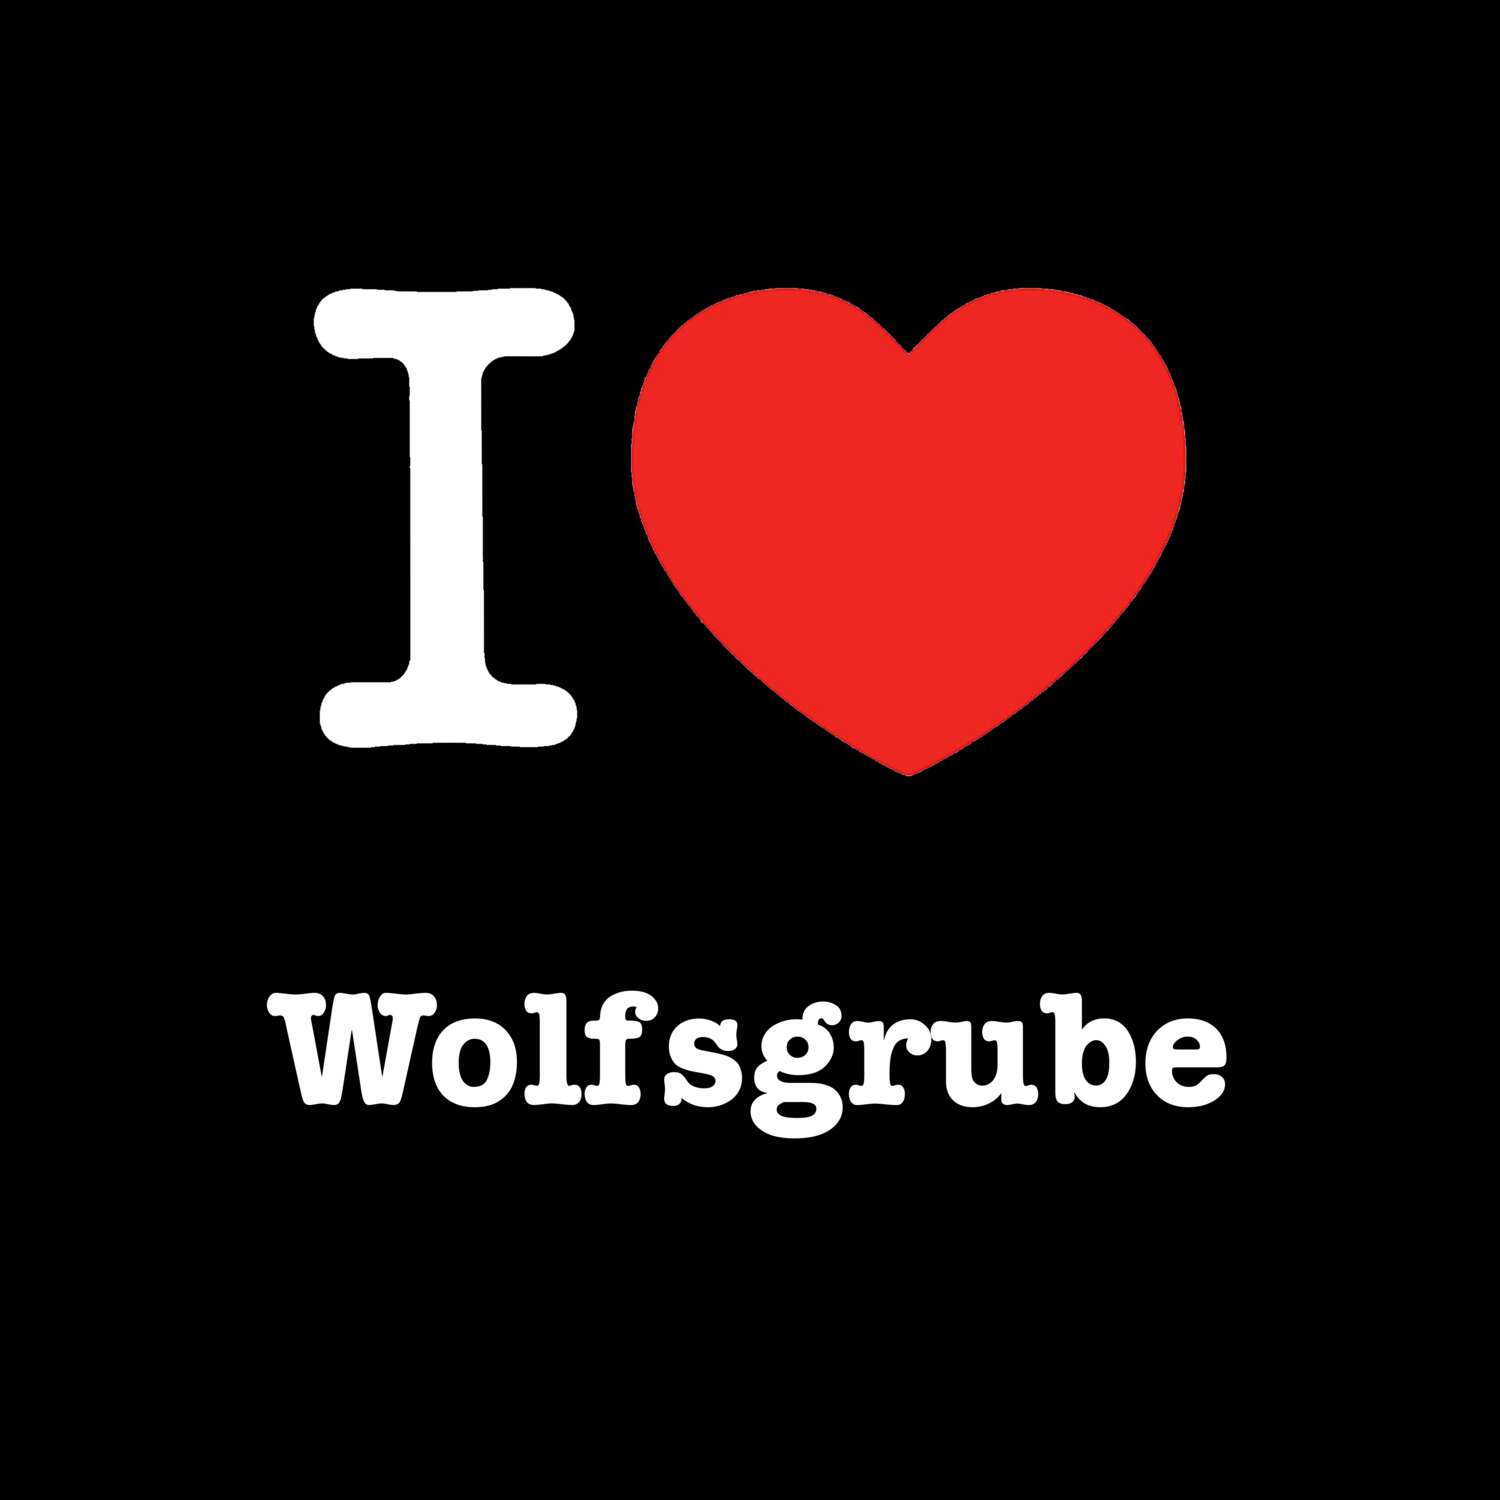 Wolfsgrube T-Shirt »I love«